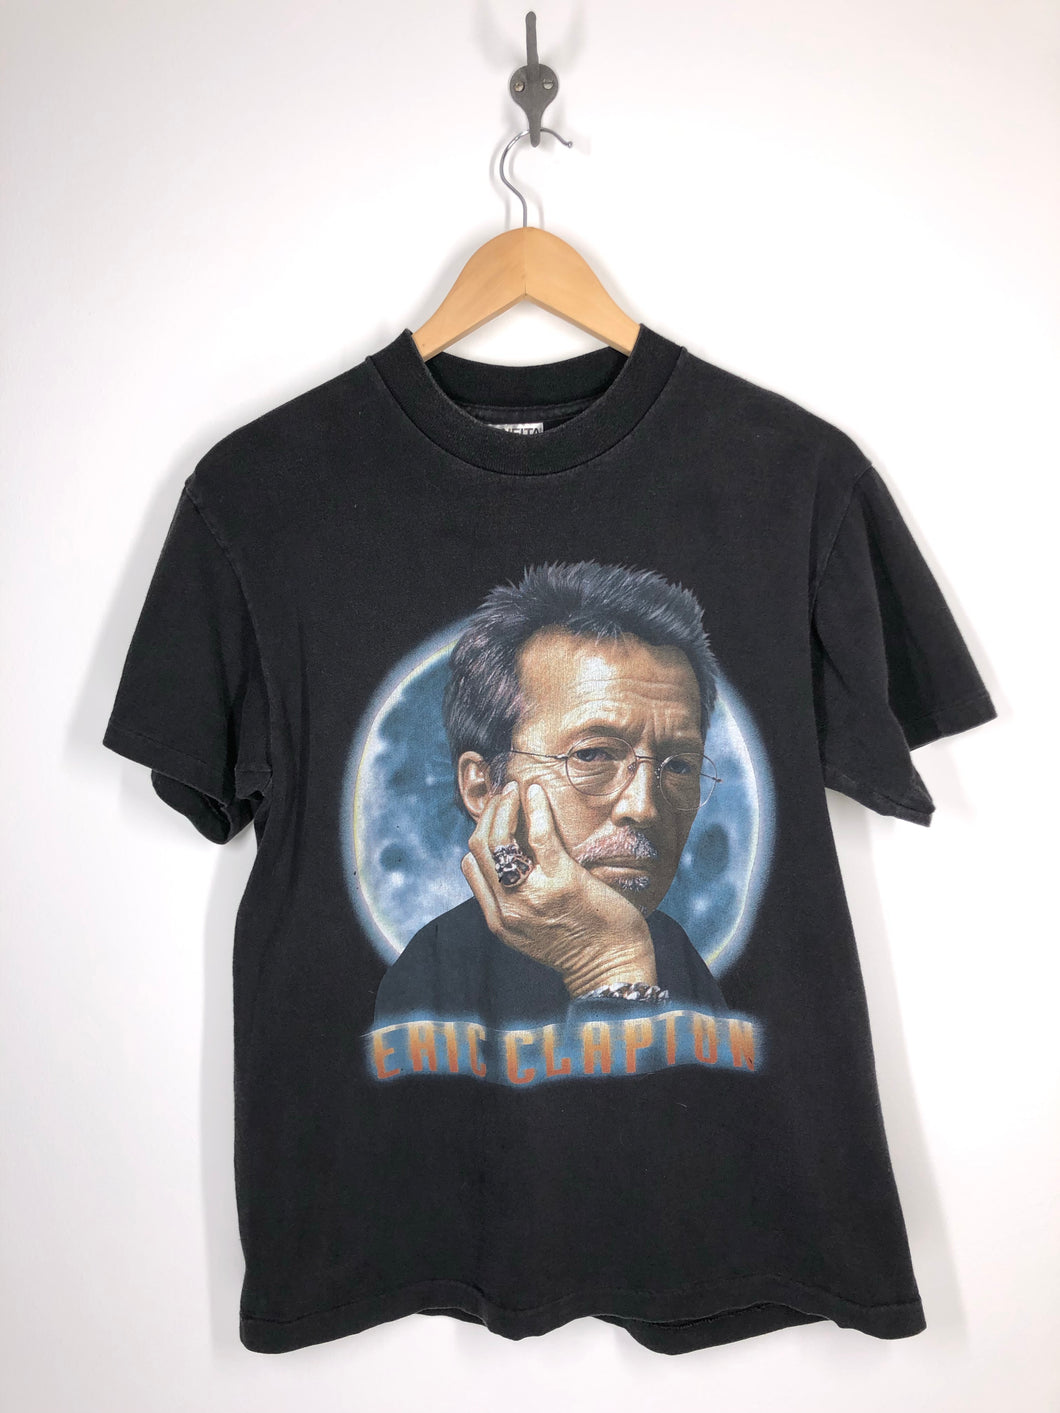 Eric Clapton - 1998 Pilgrim Tour Shirt - M